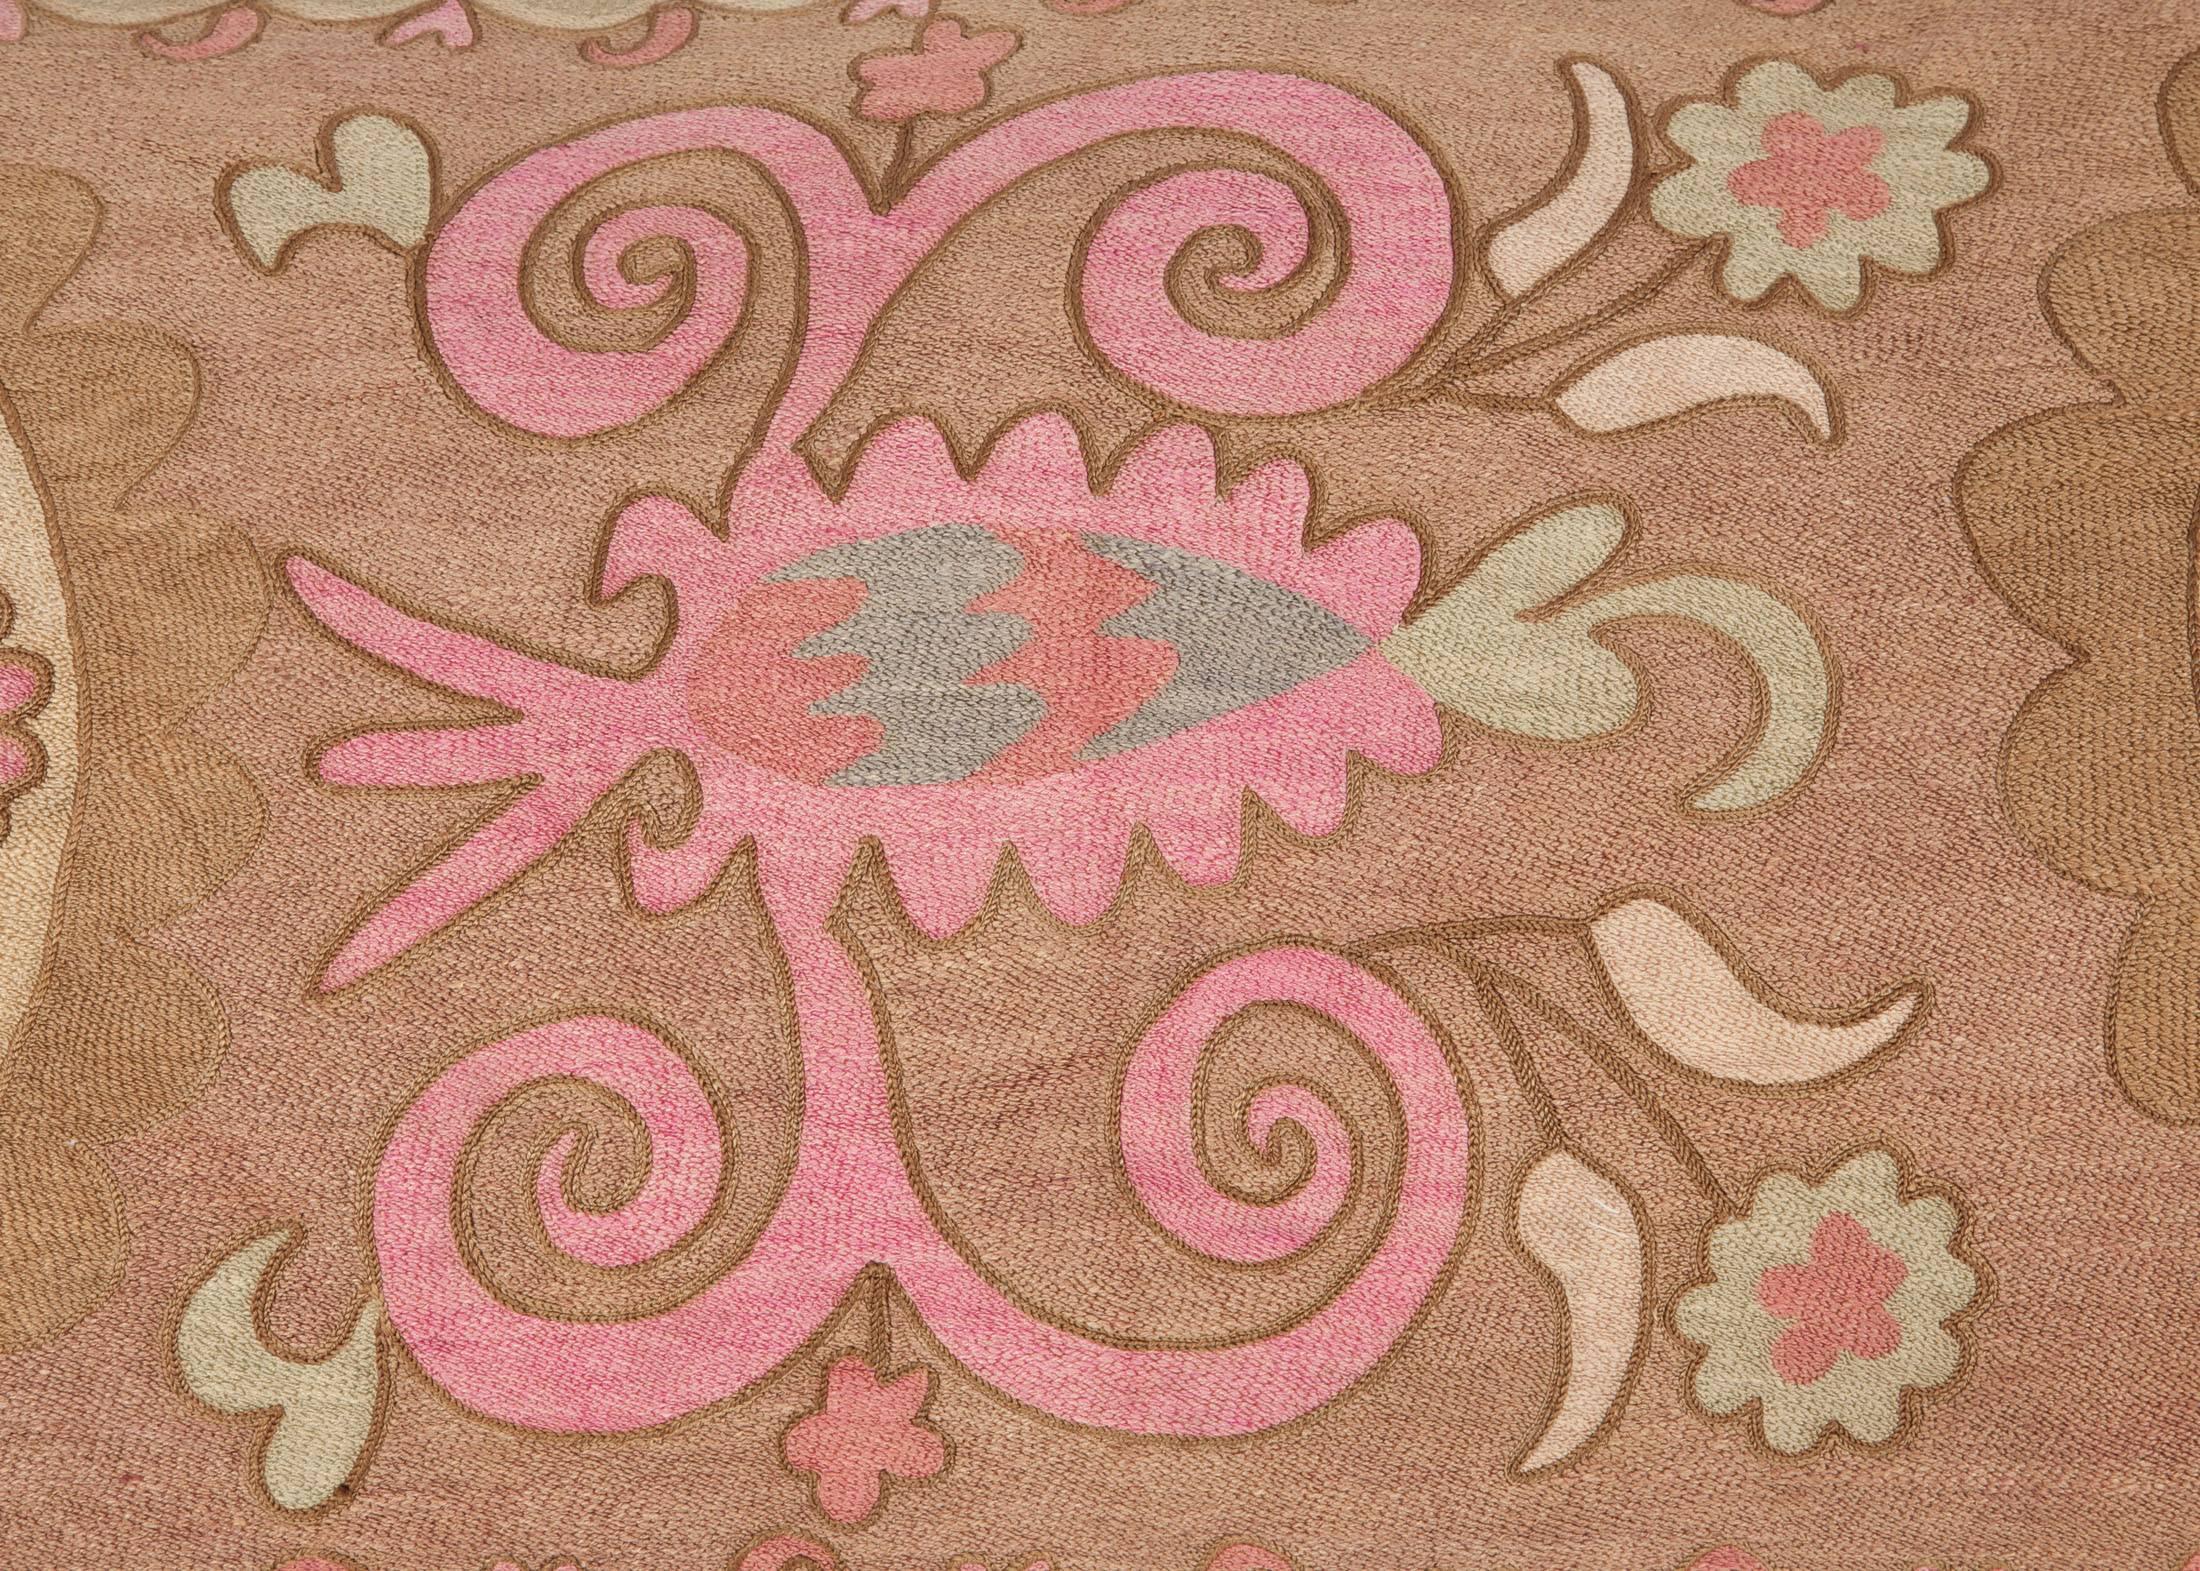 Islamic Mid-20th Century Uzbek Densly Embroidered Suzani Pillow